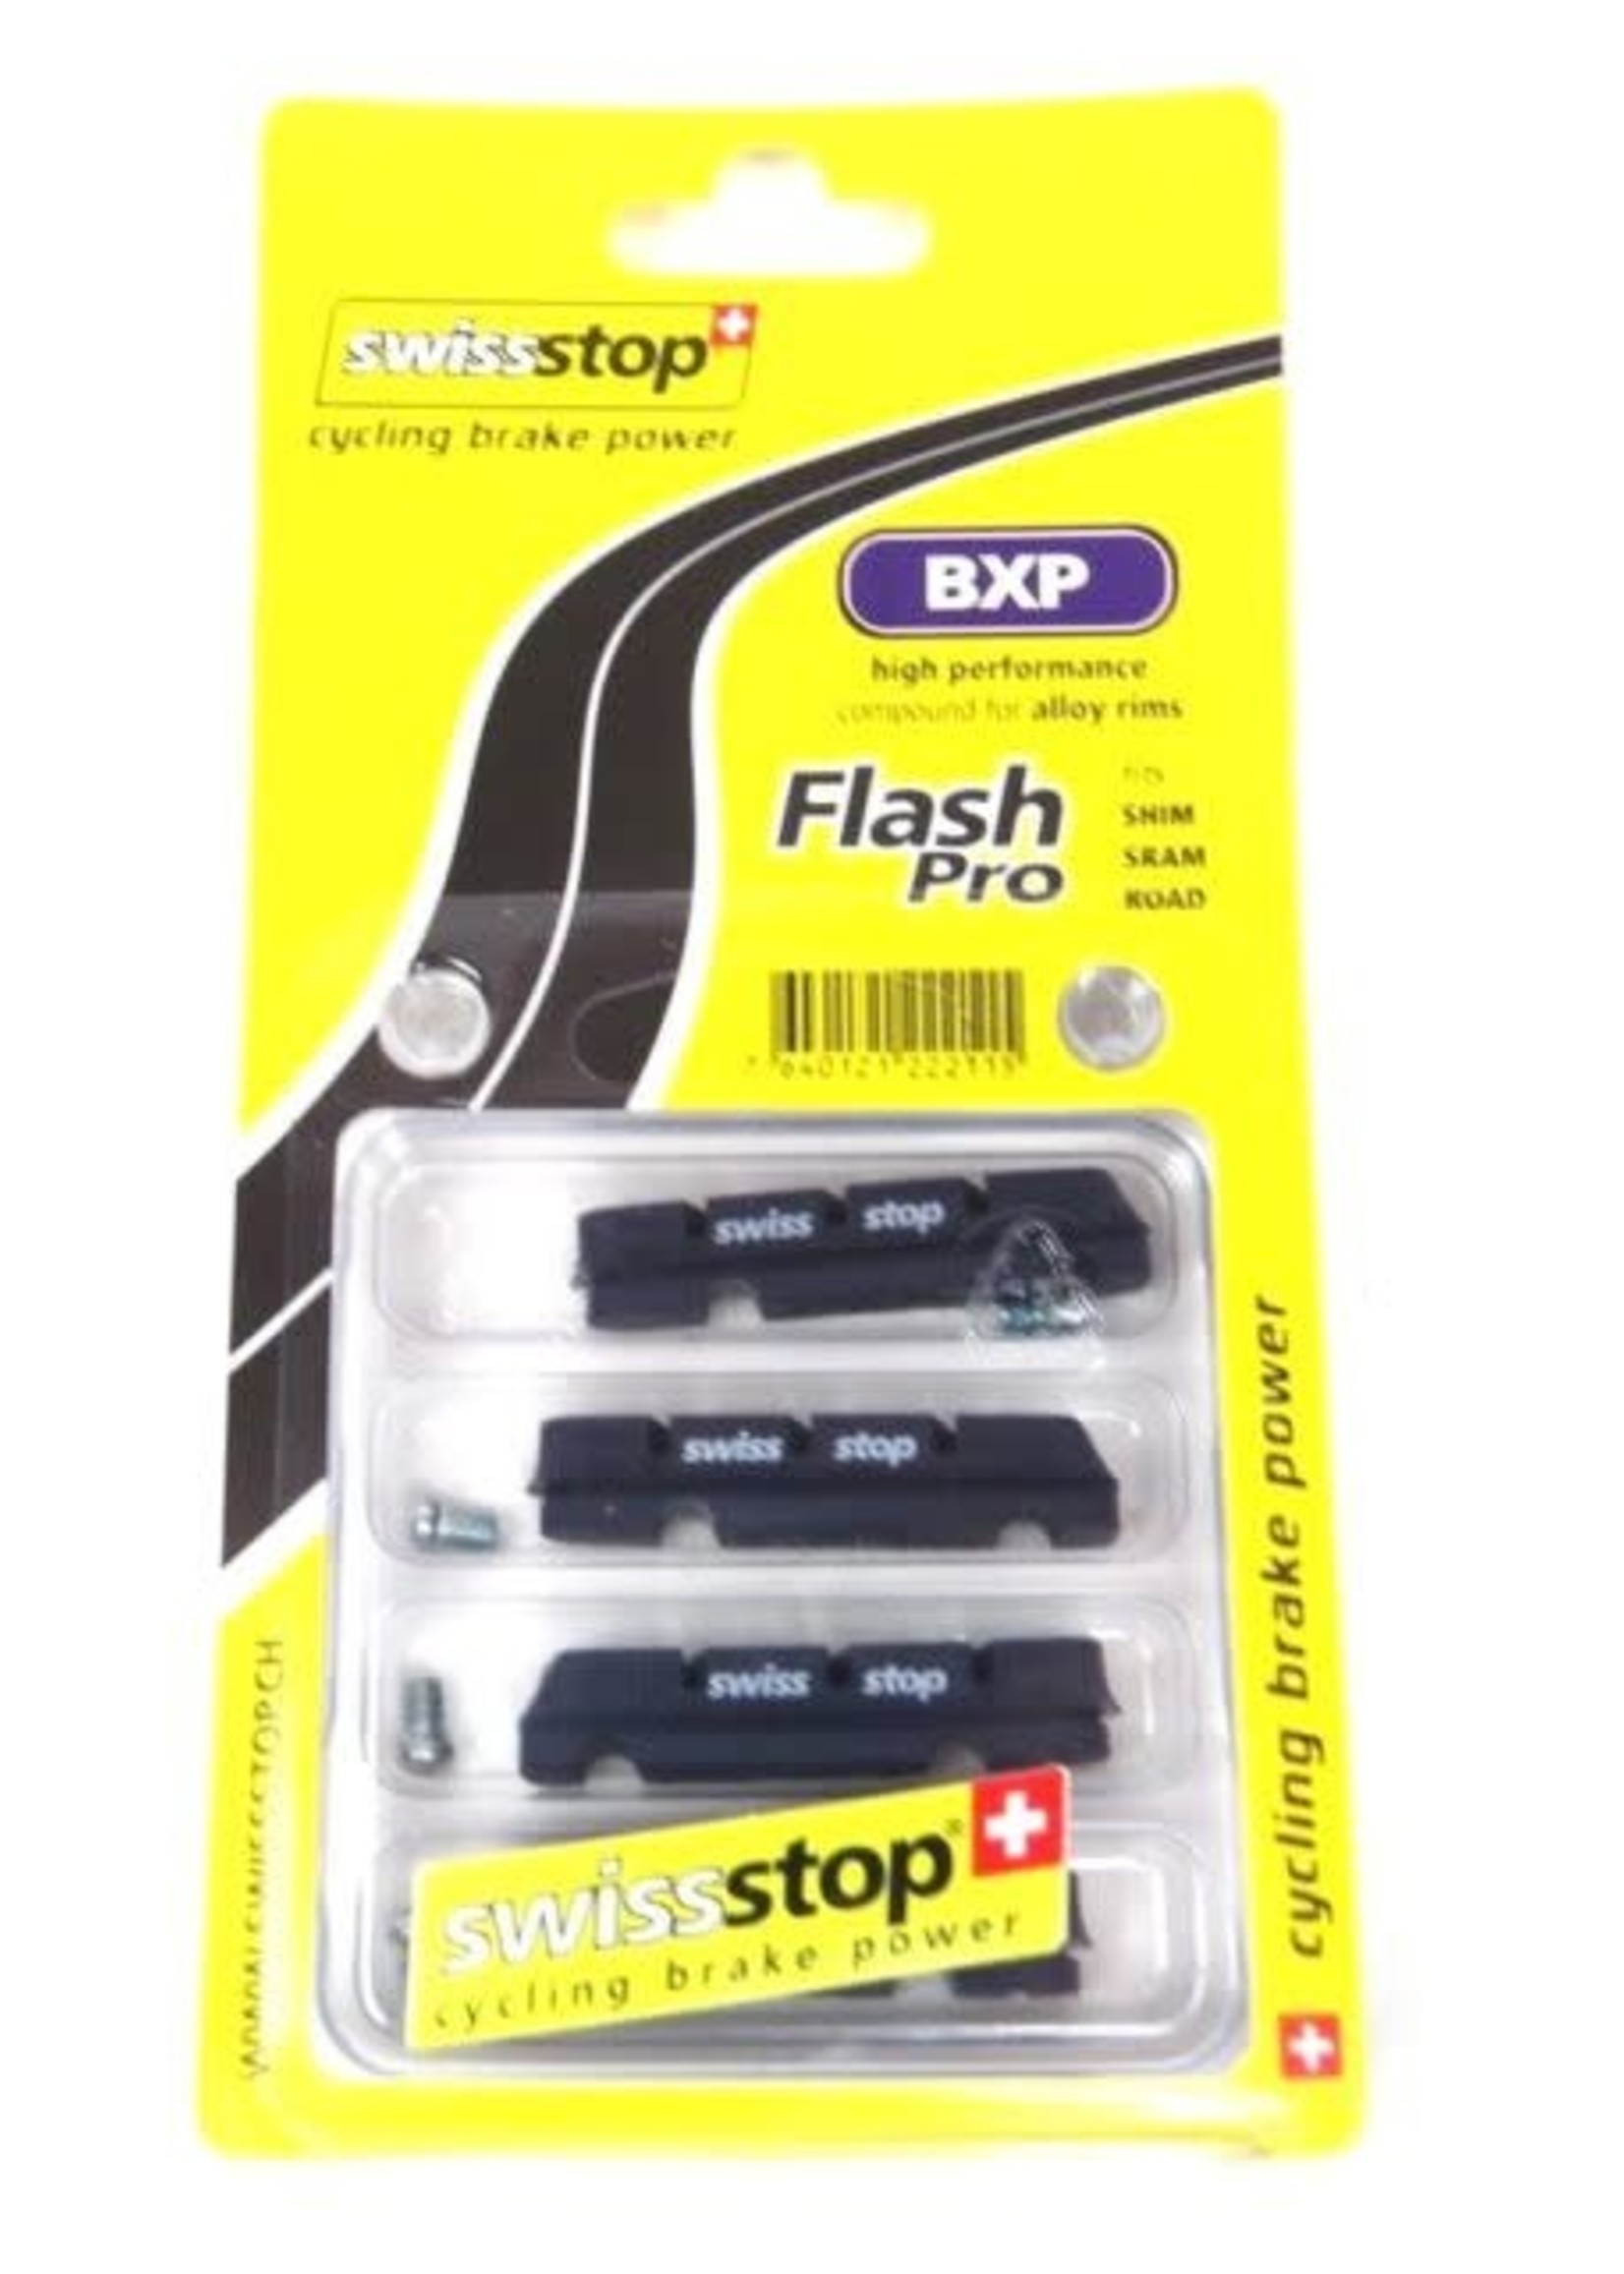 SwissStop SwissStop BXP Flash Pads